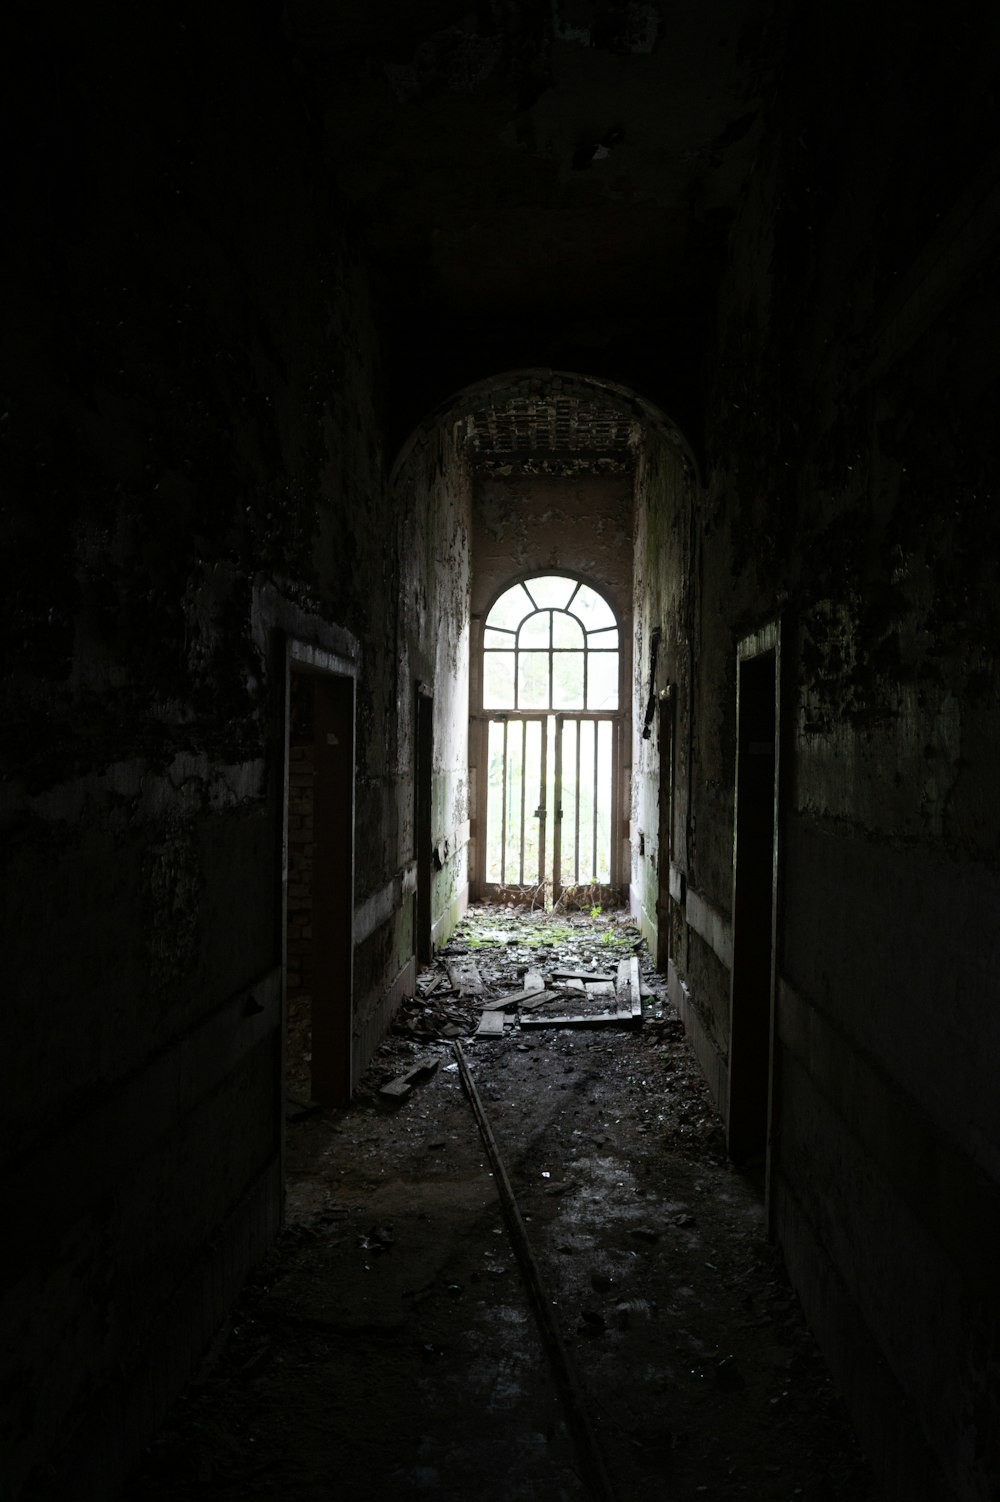 a dark room with a door and windows